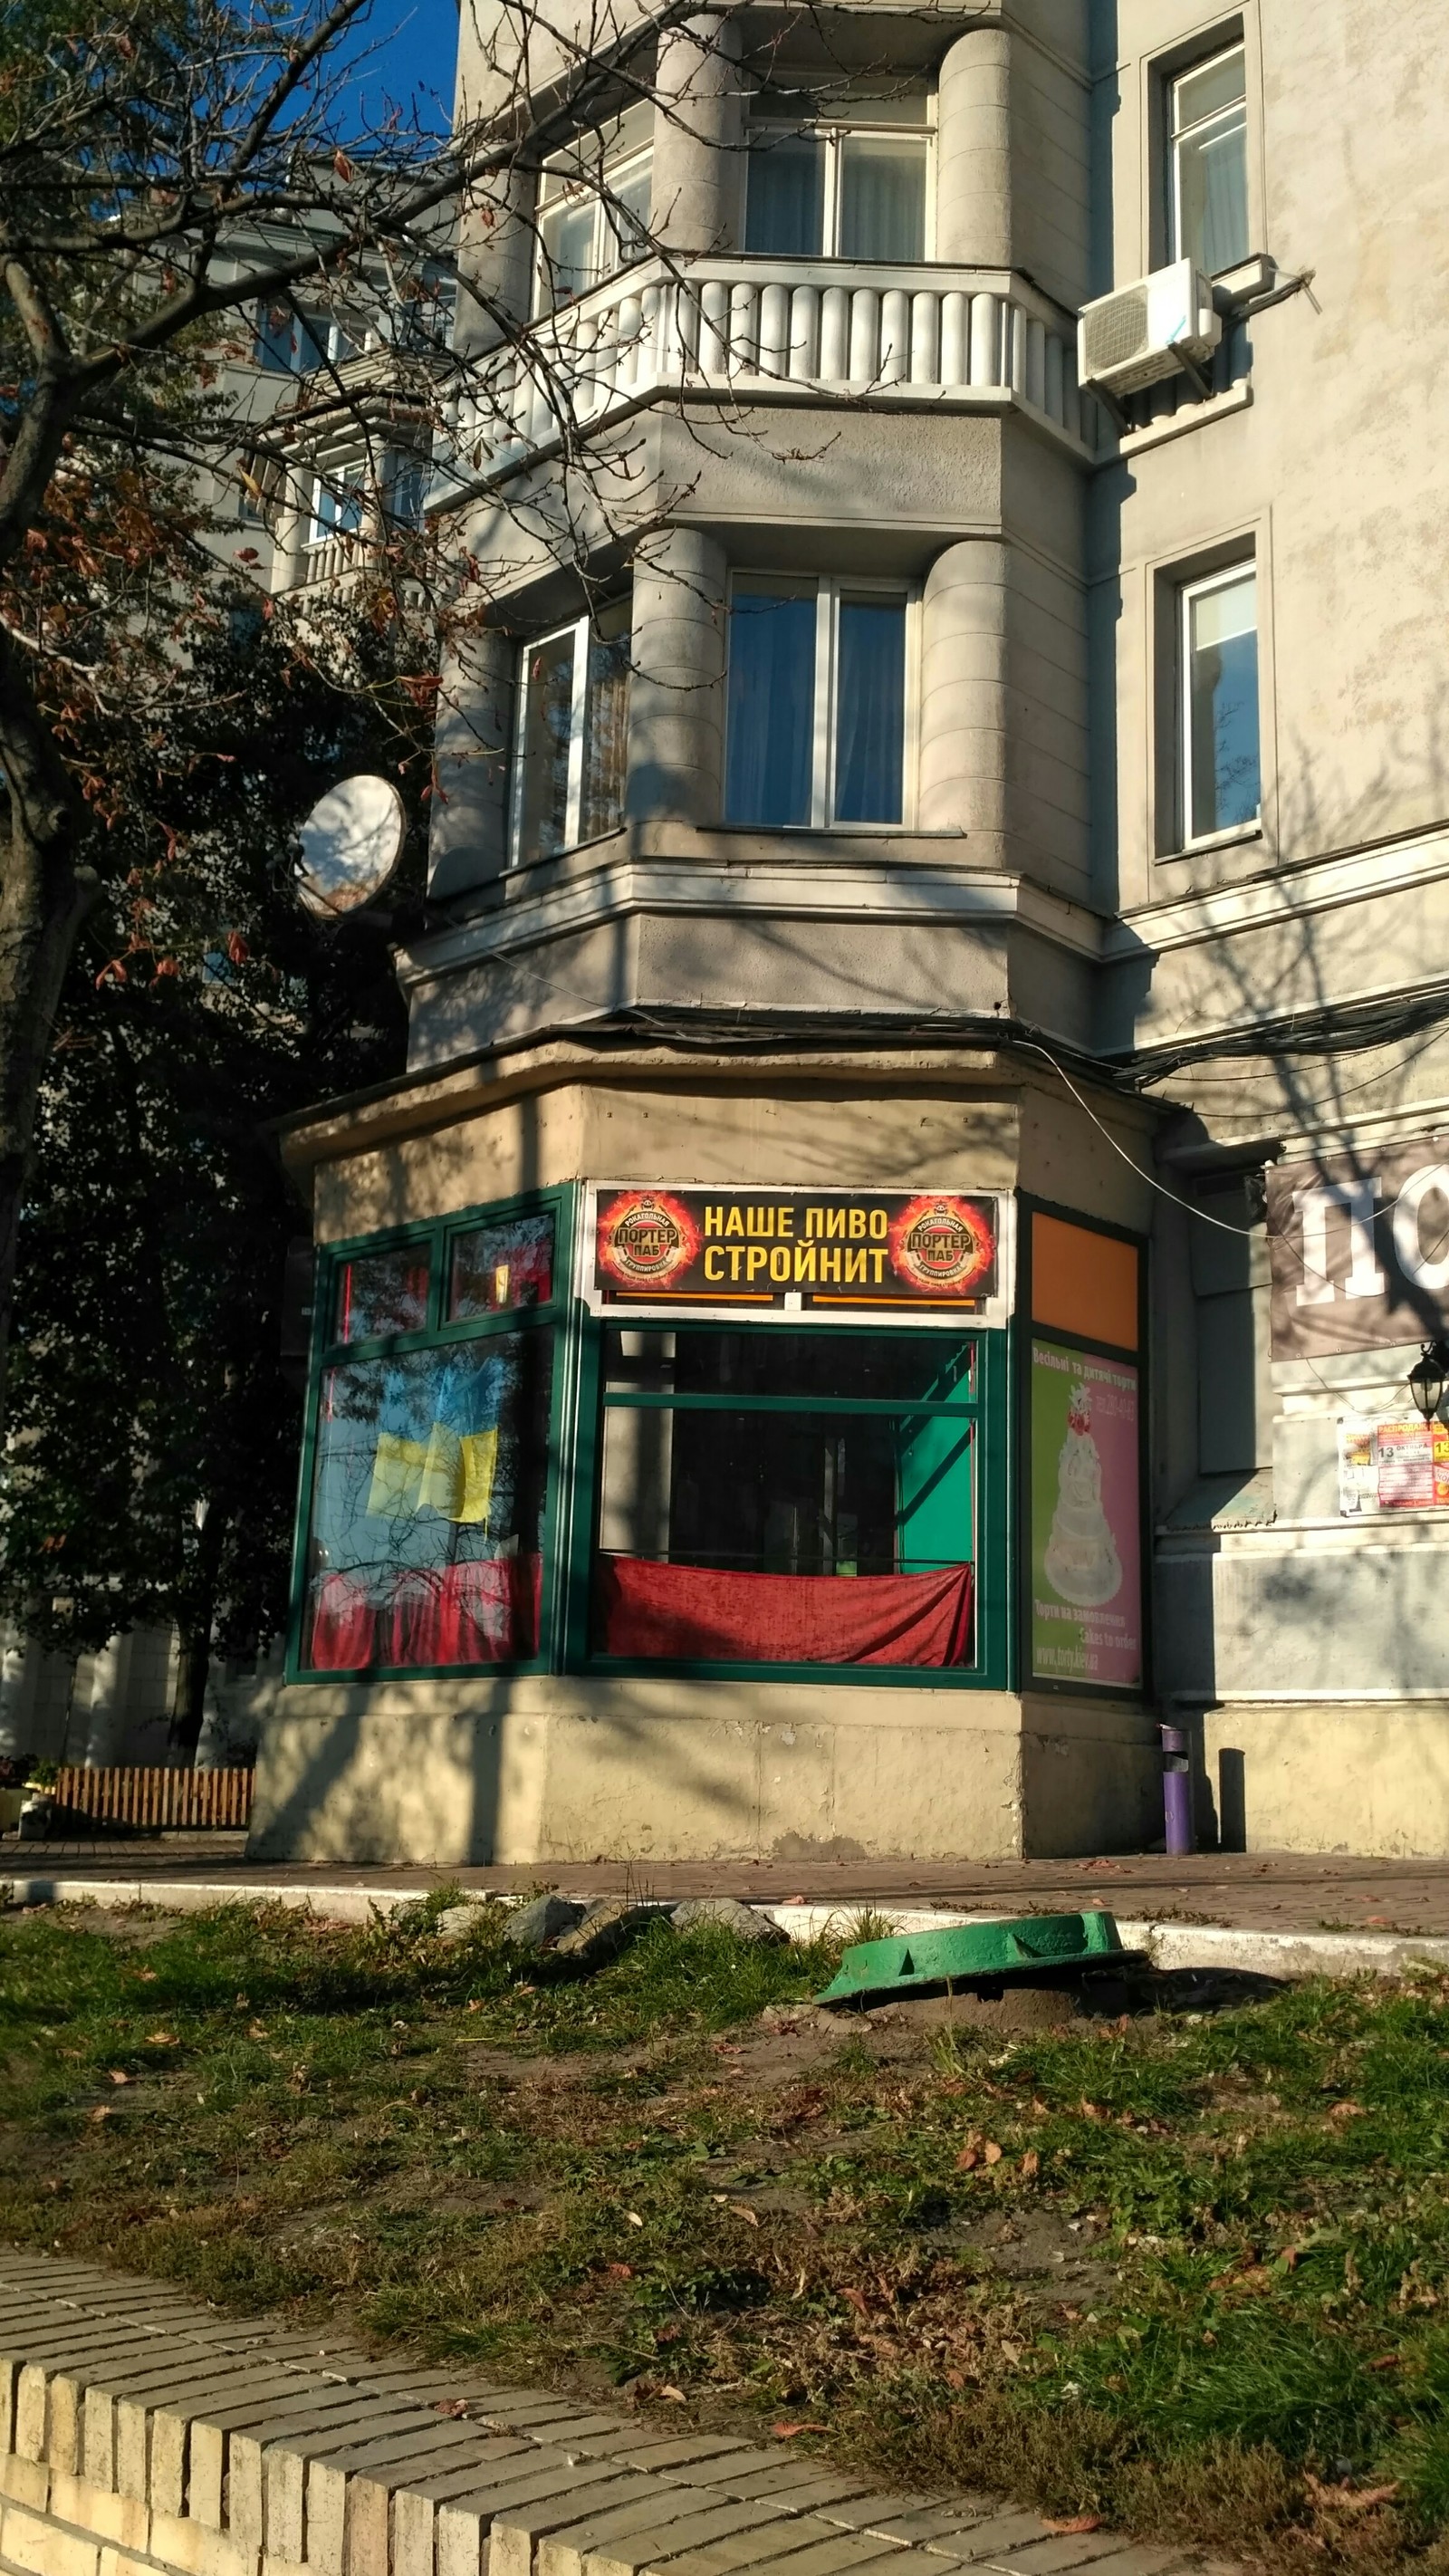 Marketing geniuses - My, Beer, Advertising, The gods of marketing, Kiev, First post